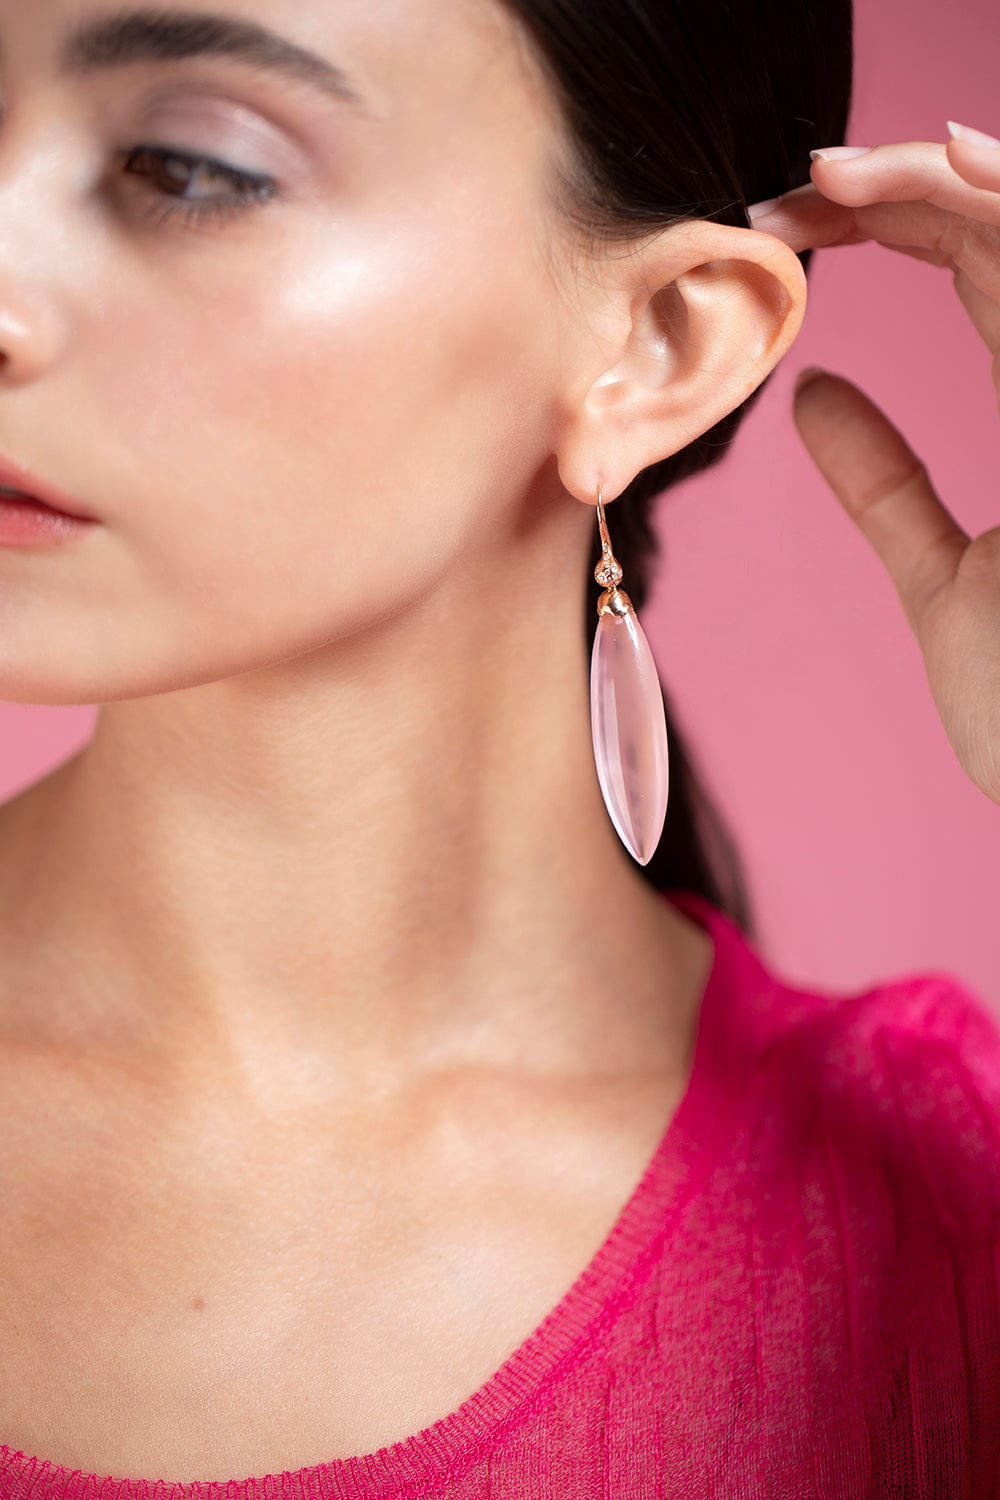 Rose Quartz and Diamond Earrings JEWELRYFINE JEWELEARRING LUCIFER VIR HONESTUS   